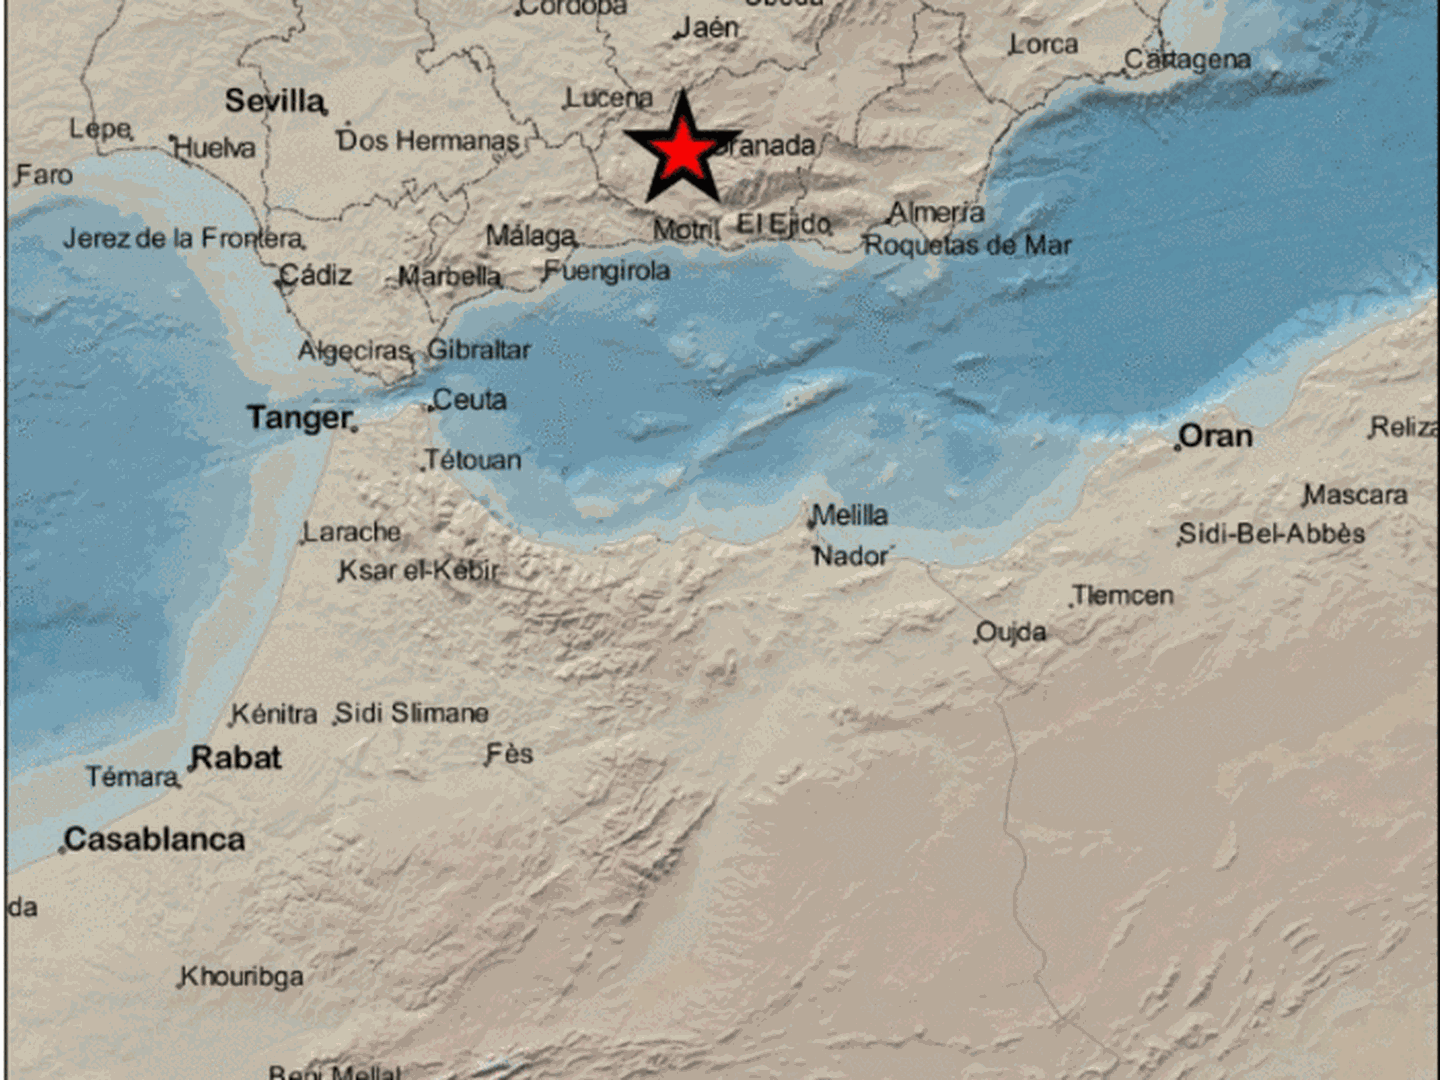 Epicentro del terremoto en las proximidades de Chauchina. (IGN)